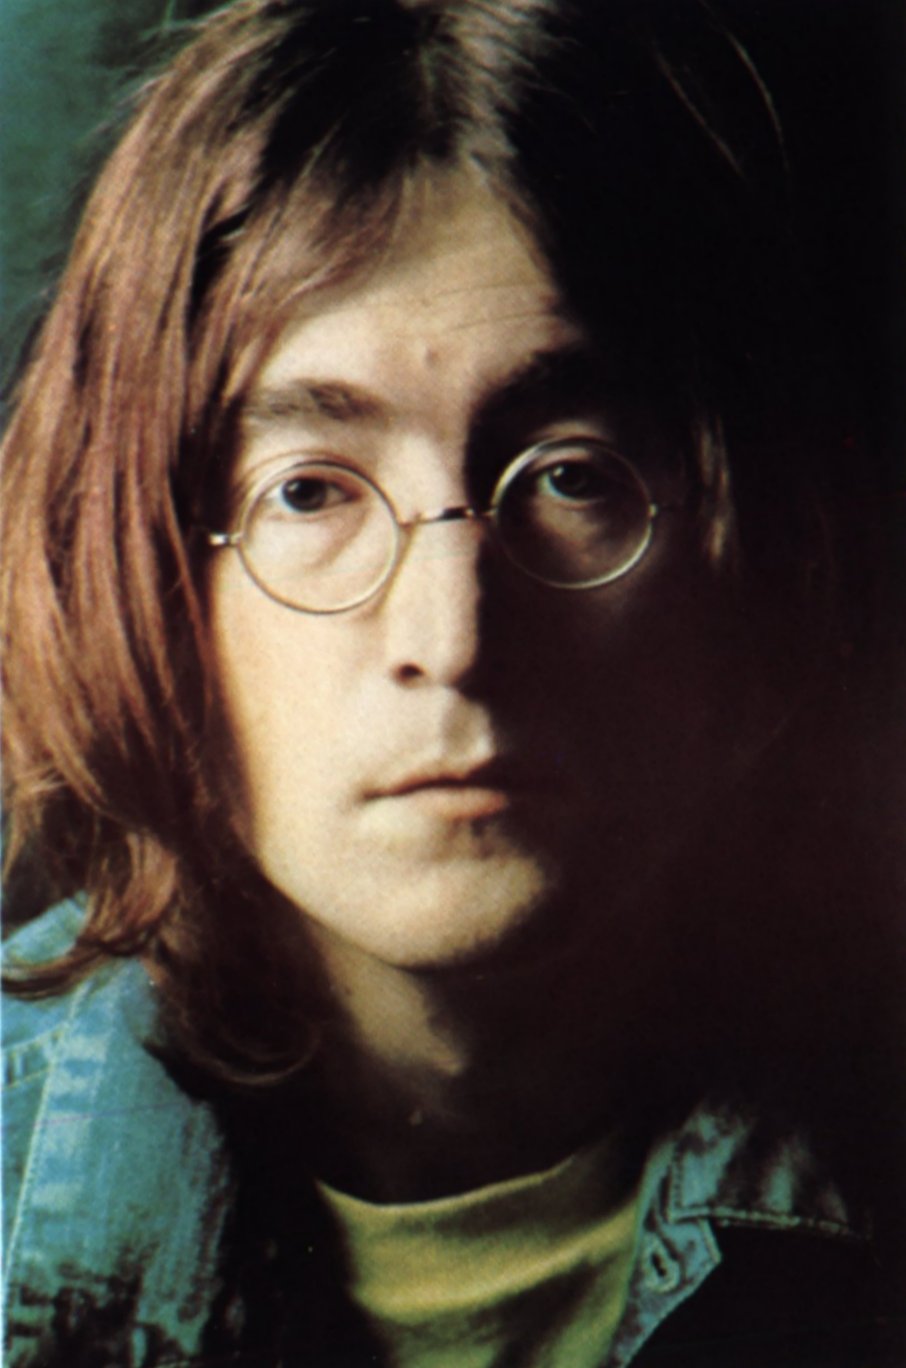 John Lennon's Killer: 'I'm Sorry For Being Such An Idiot'
